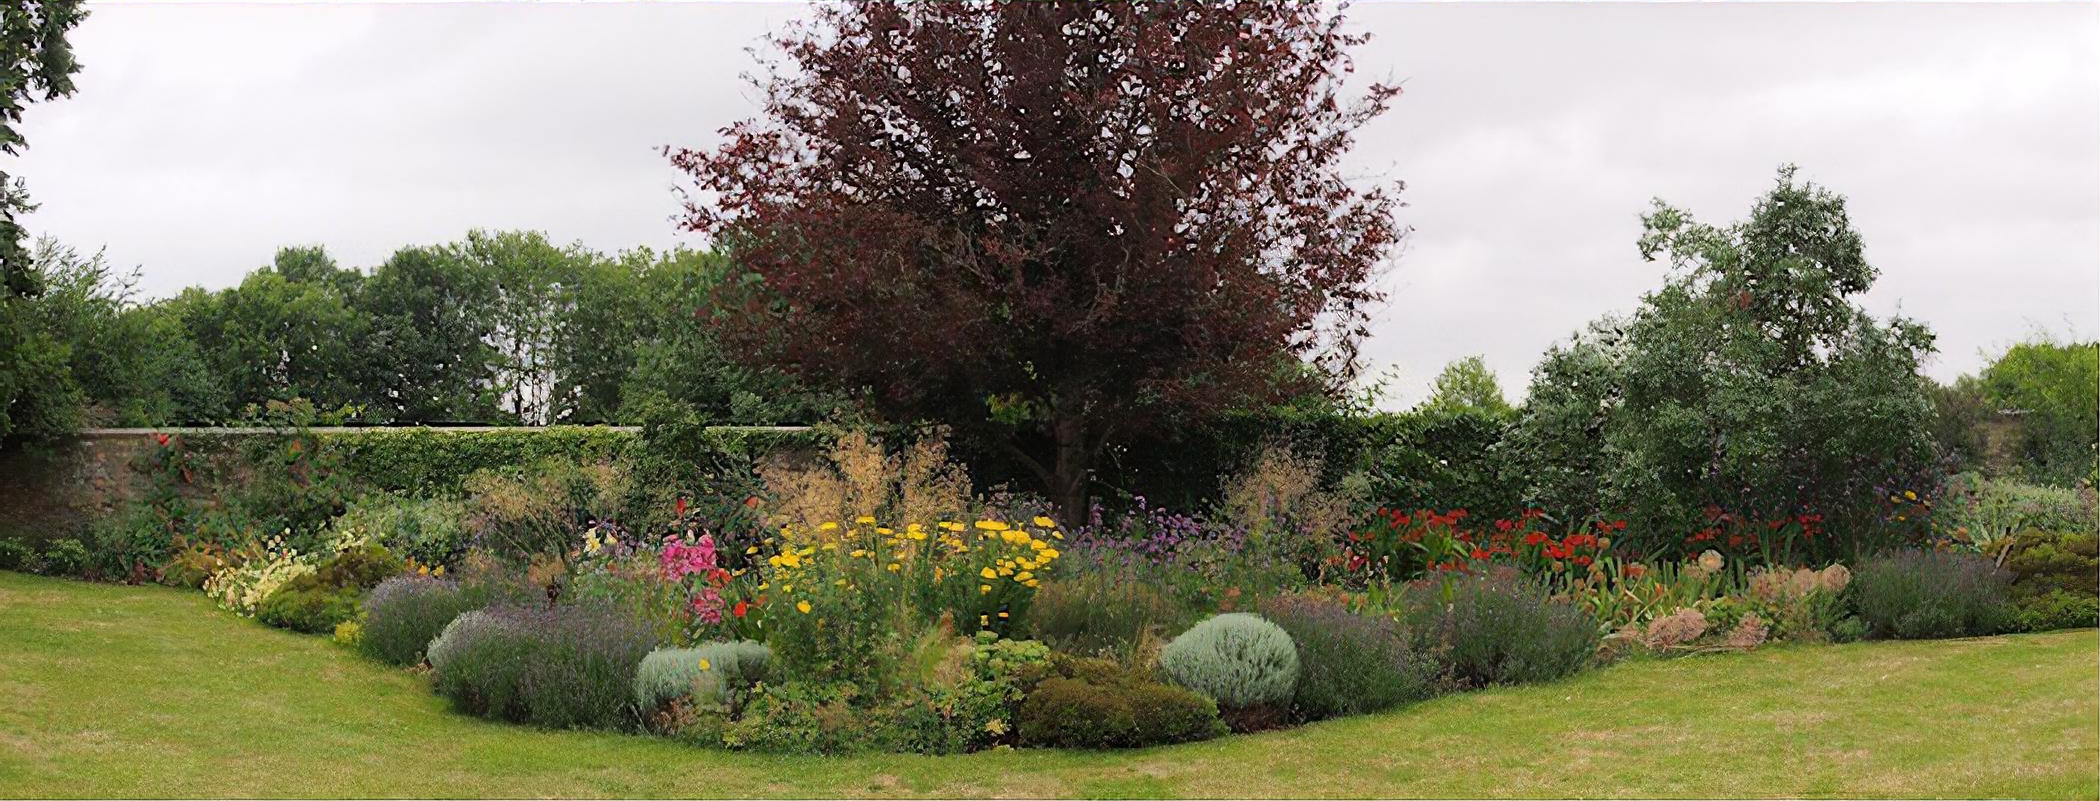 Tim Ewbank's garden